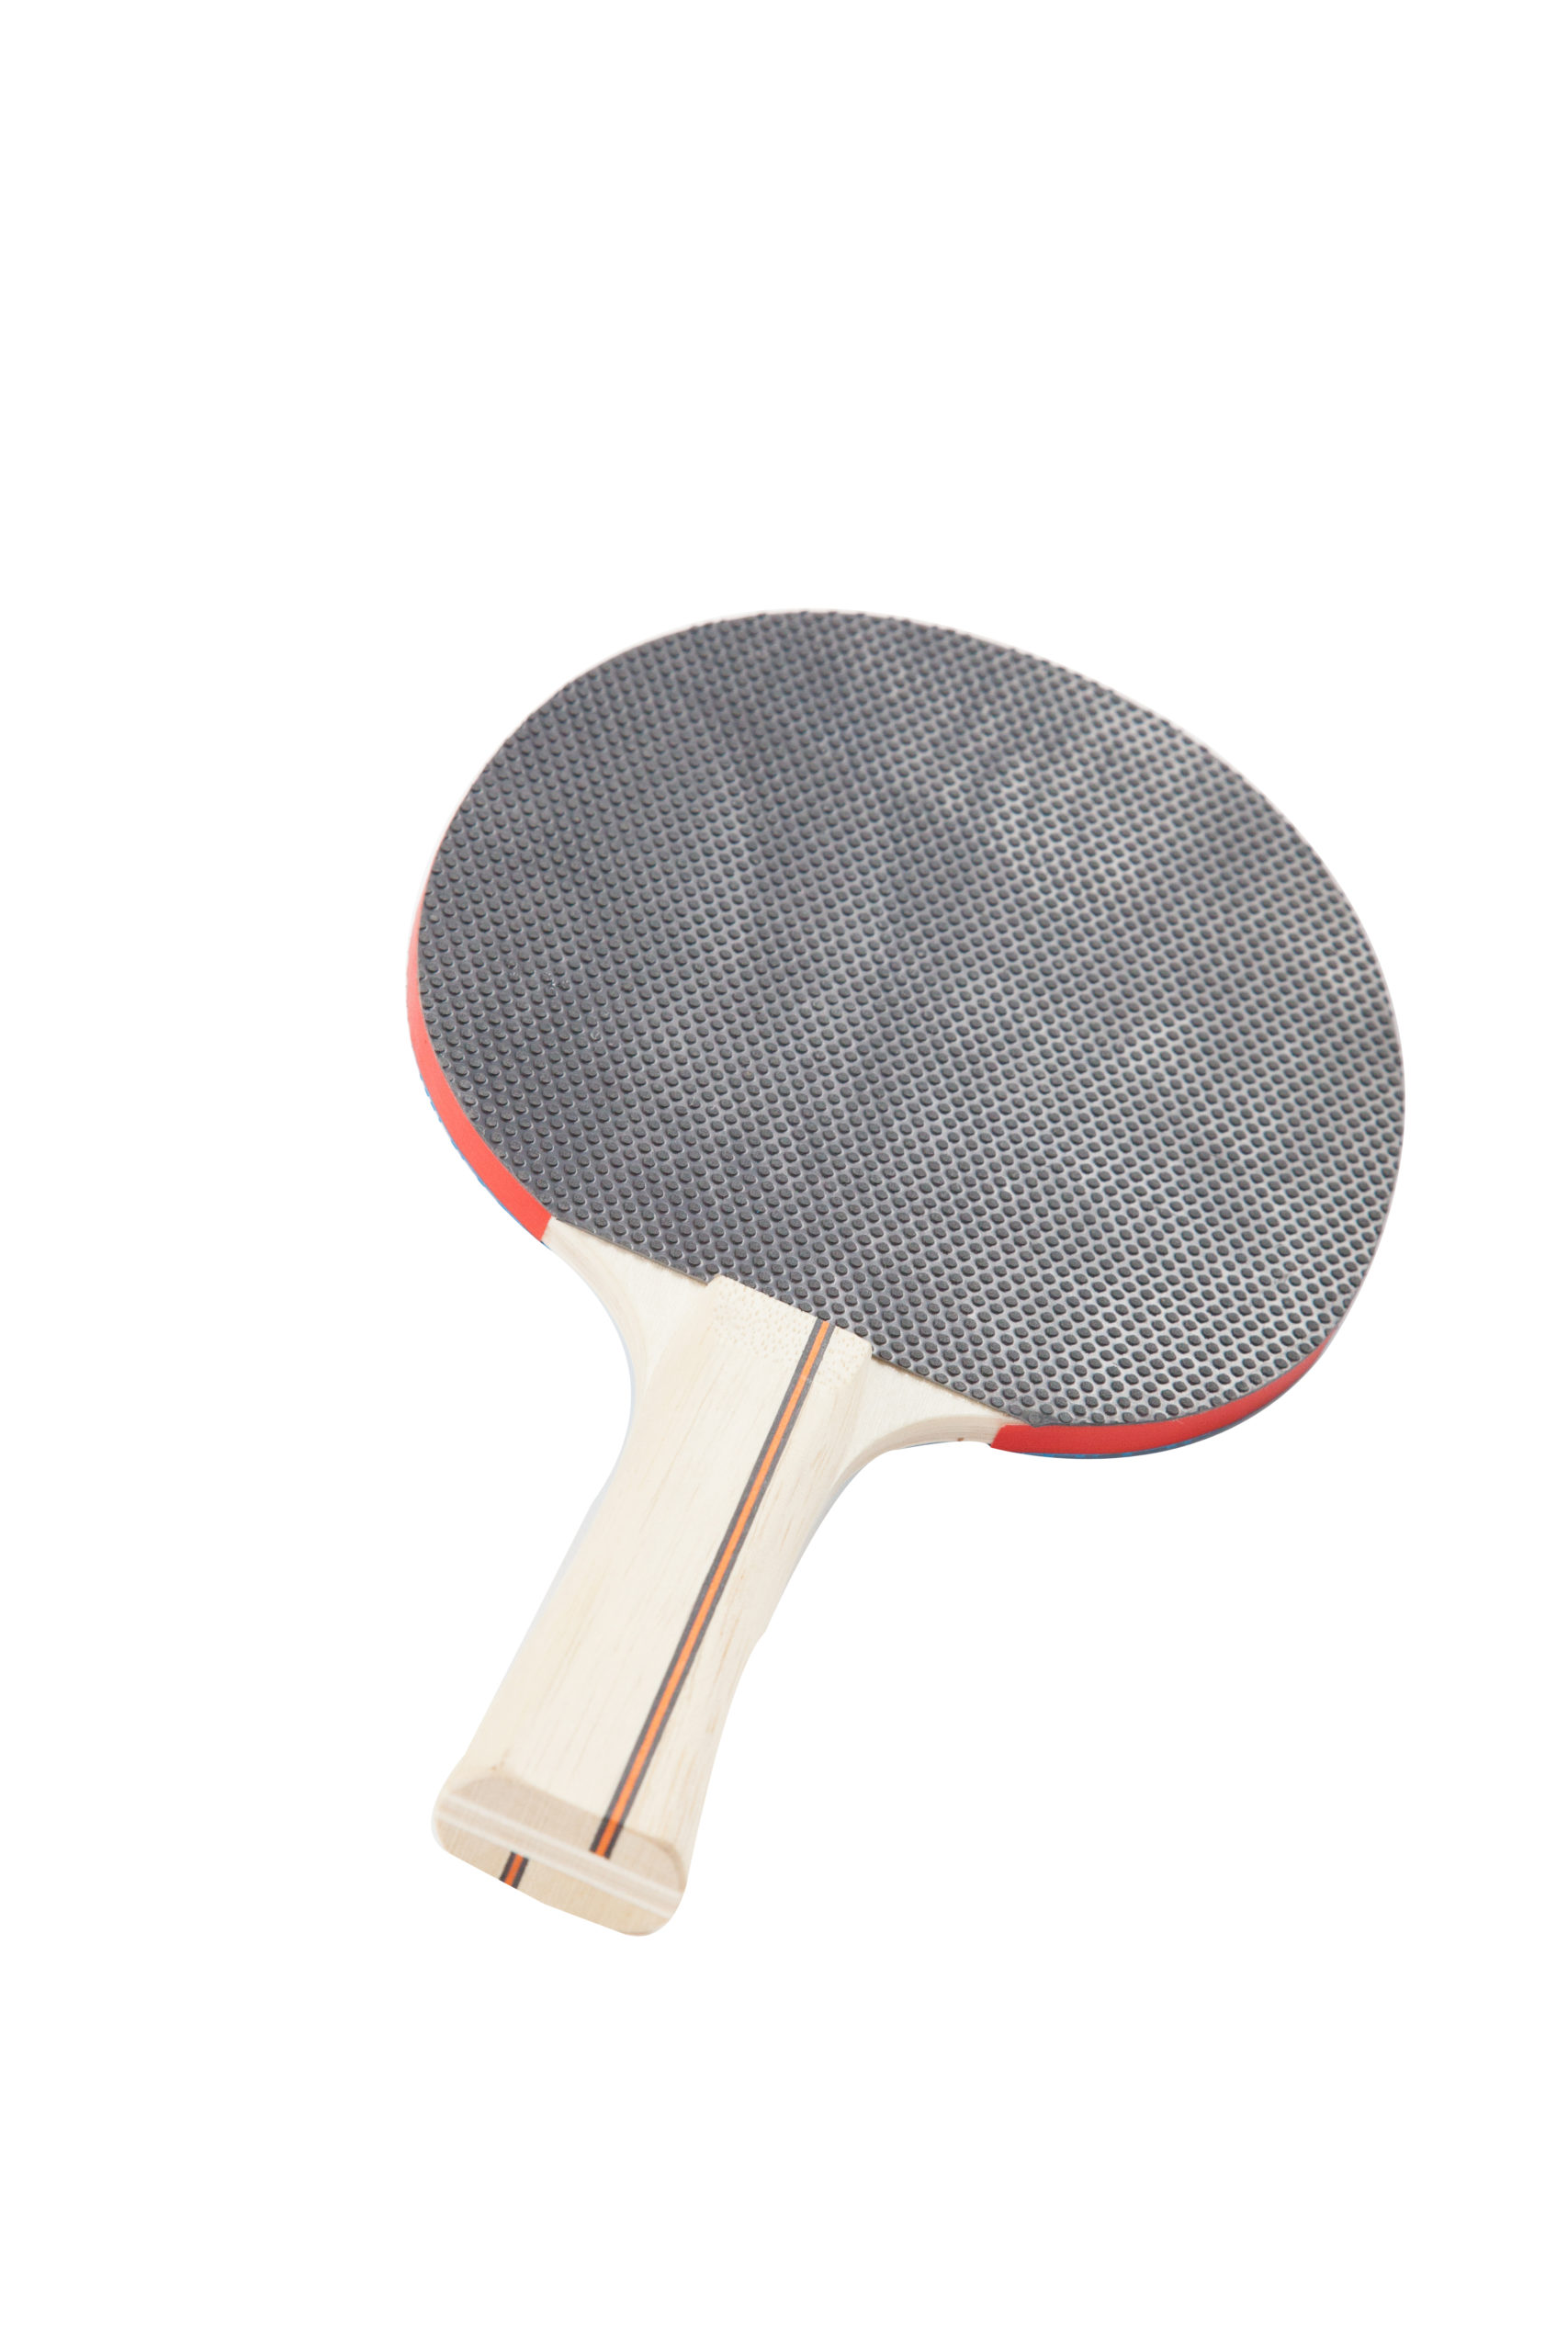 Balls Paddles Joola Table Tennis Set Retractable Net 